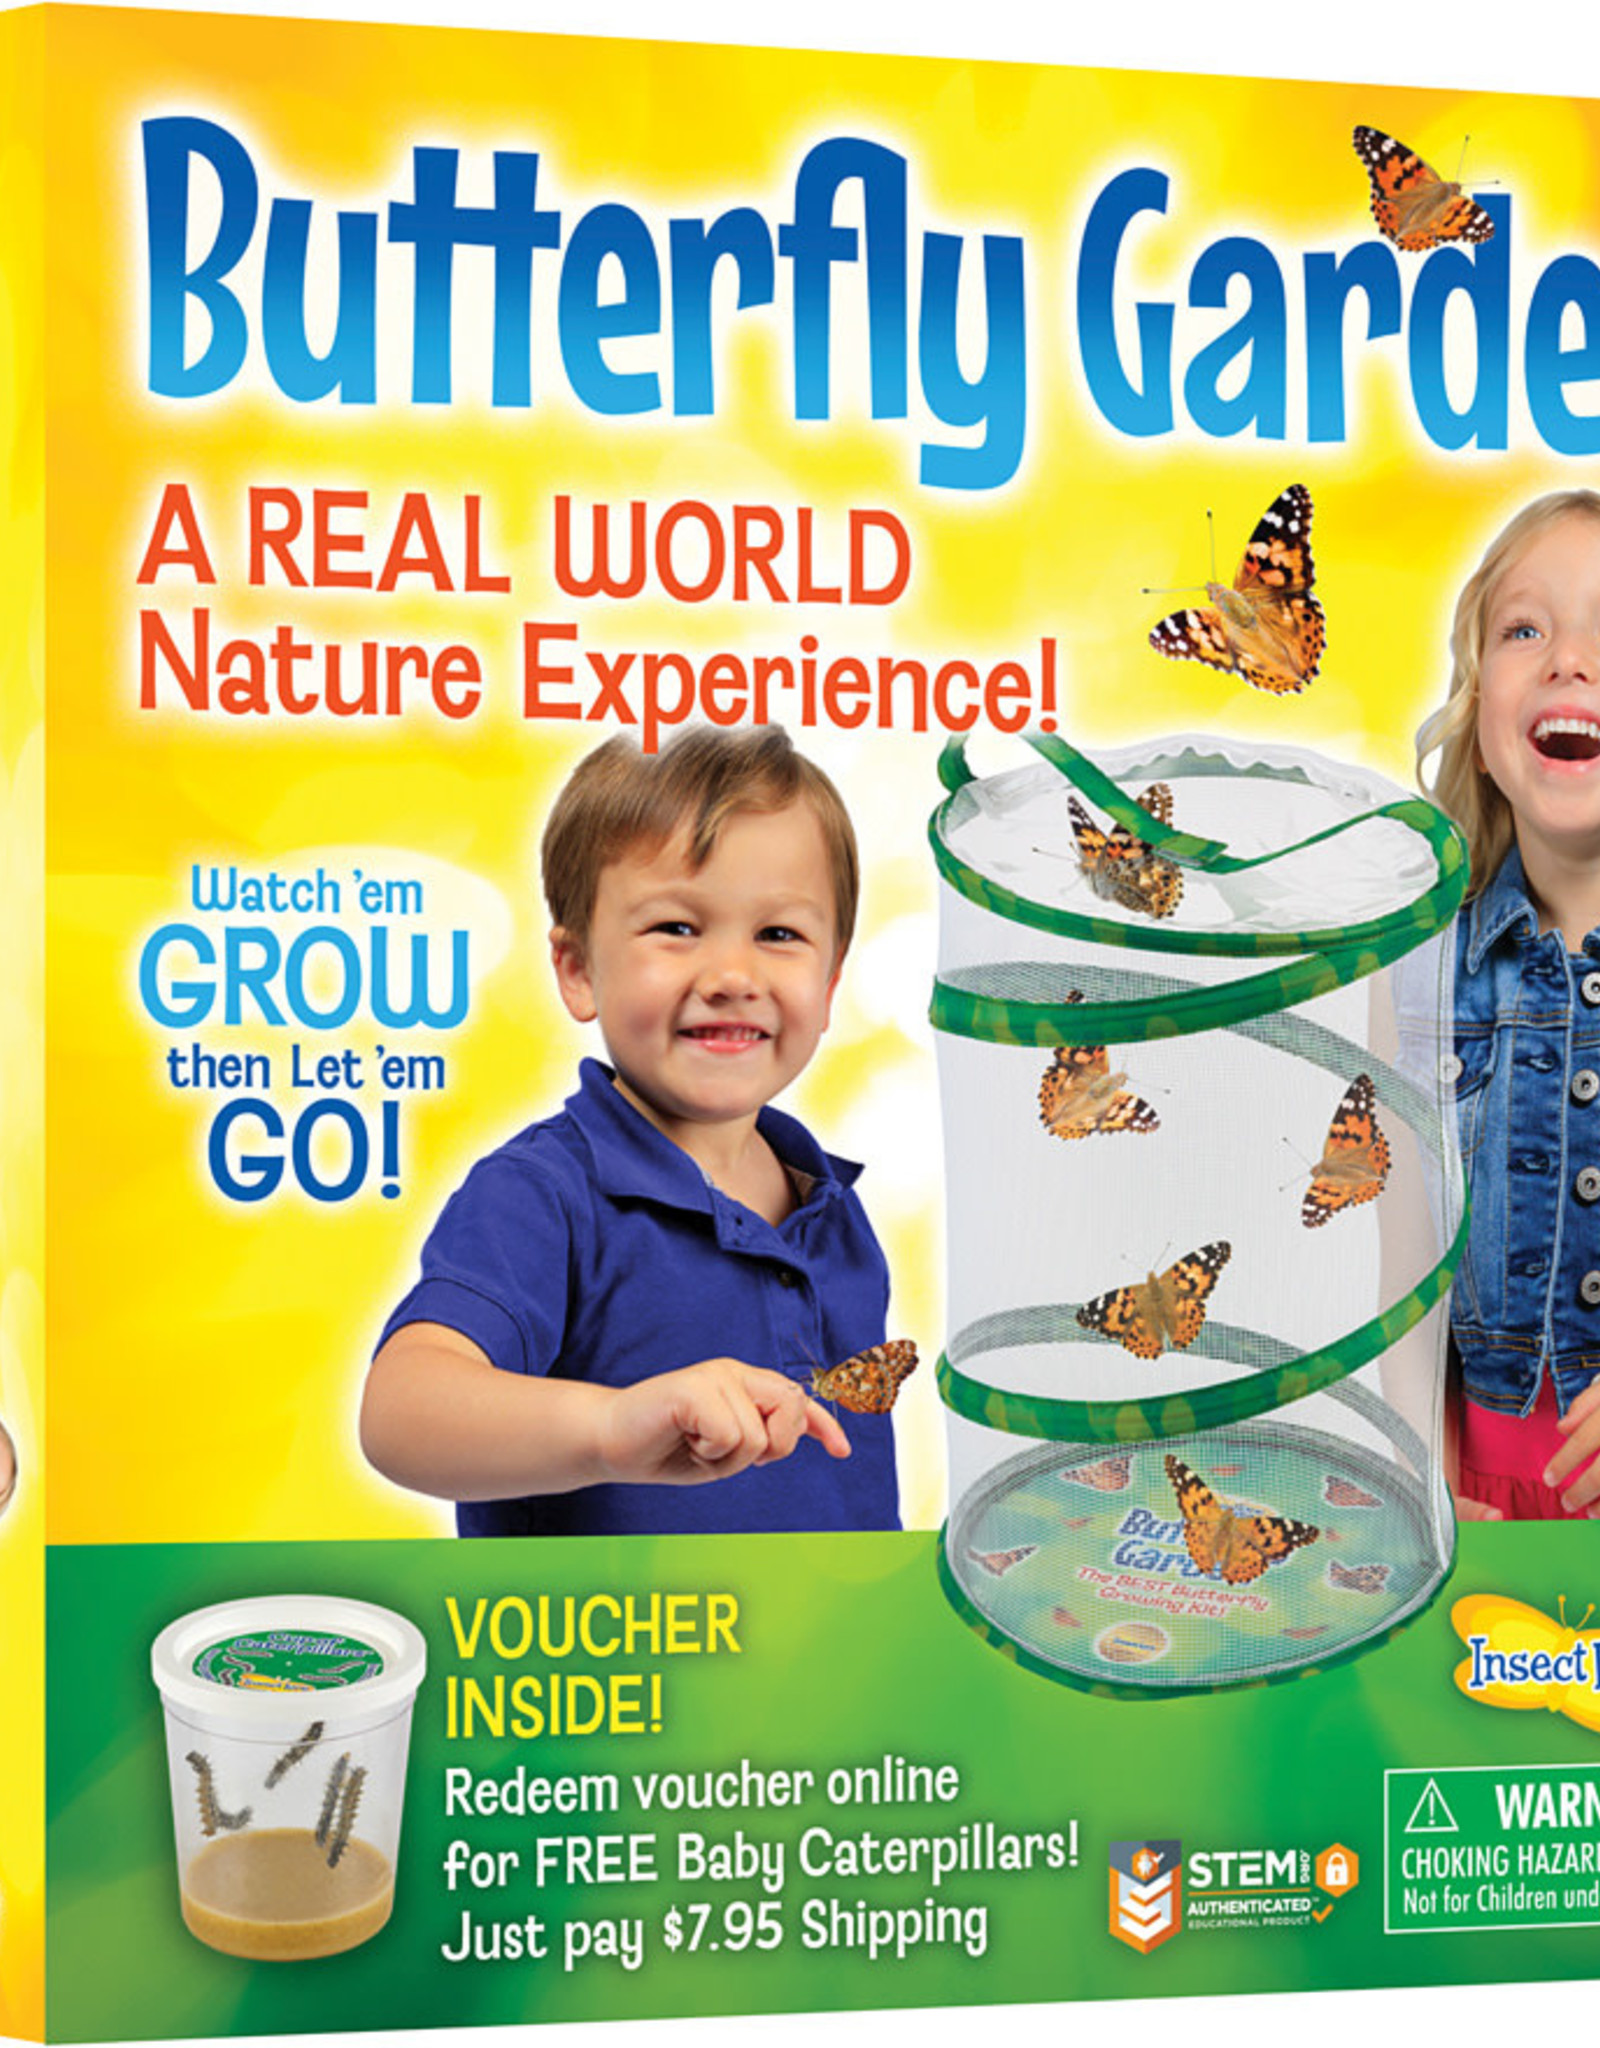 Butterfly Garden * With Voucher